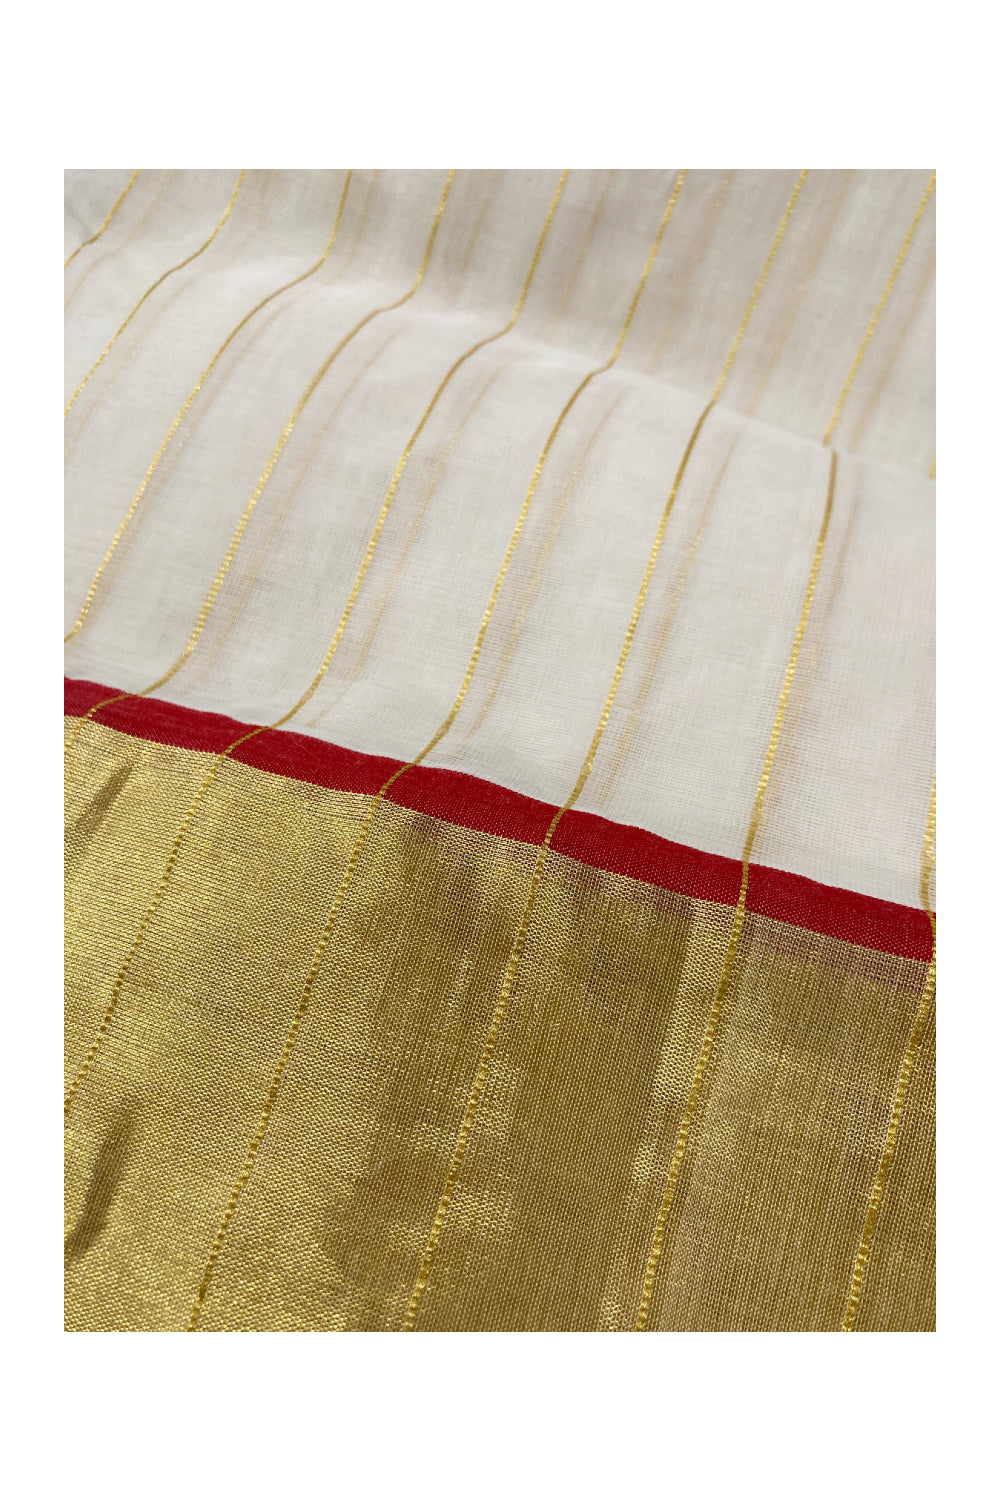 Southloom™ Handloom Single Mundum Neriyathum (Set Mundu) with Kasavu Stripes Body and Puliyilakkara Border